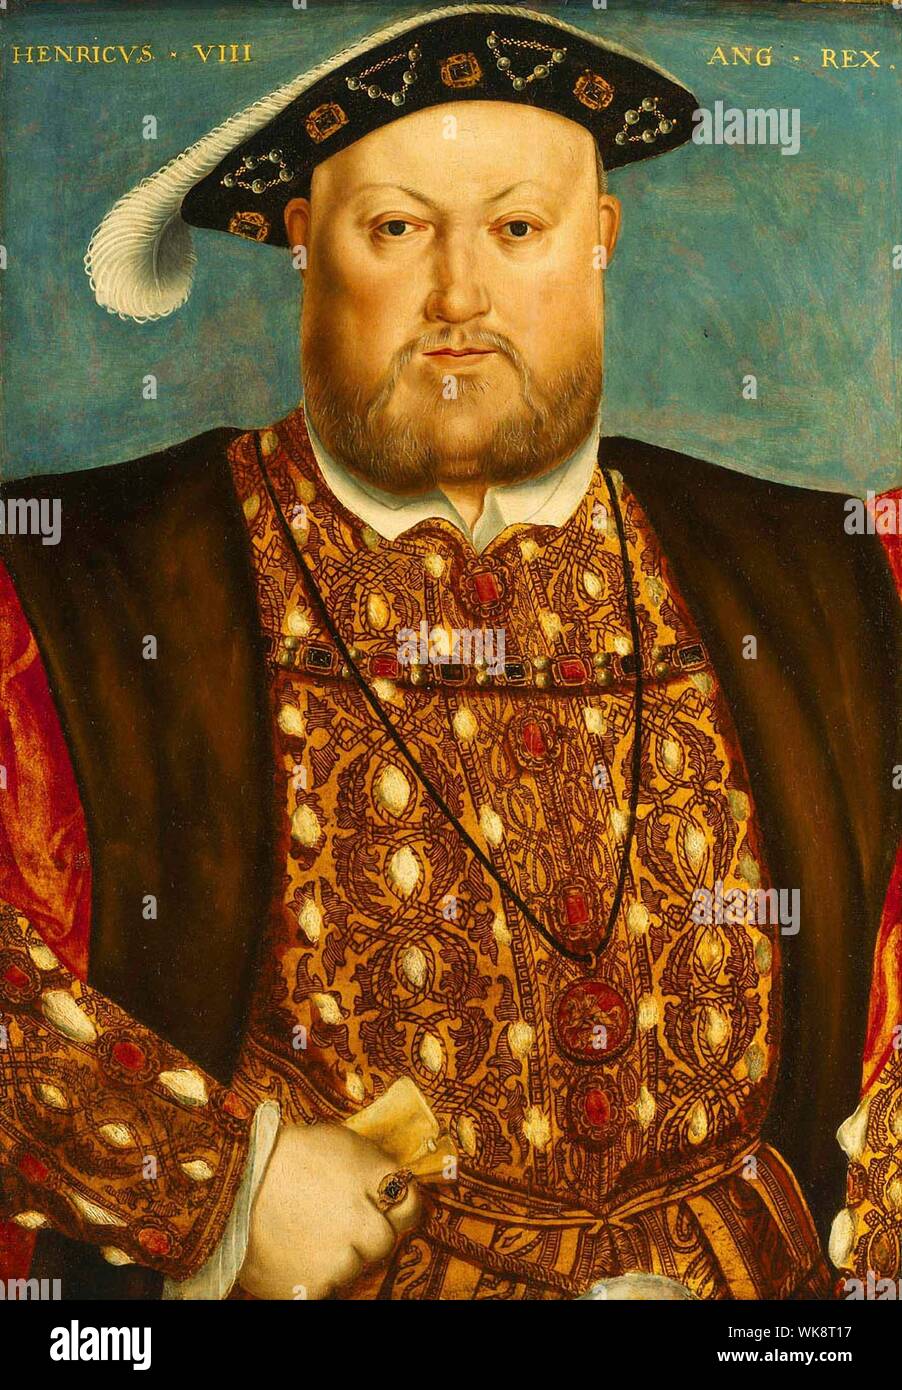 Henry VIII (28 juin 1491 - 28 janvier 1547) fut roi d'Angleterre Banque D'Images